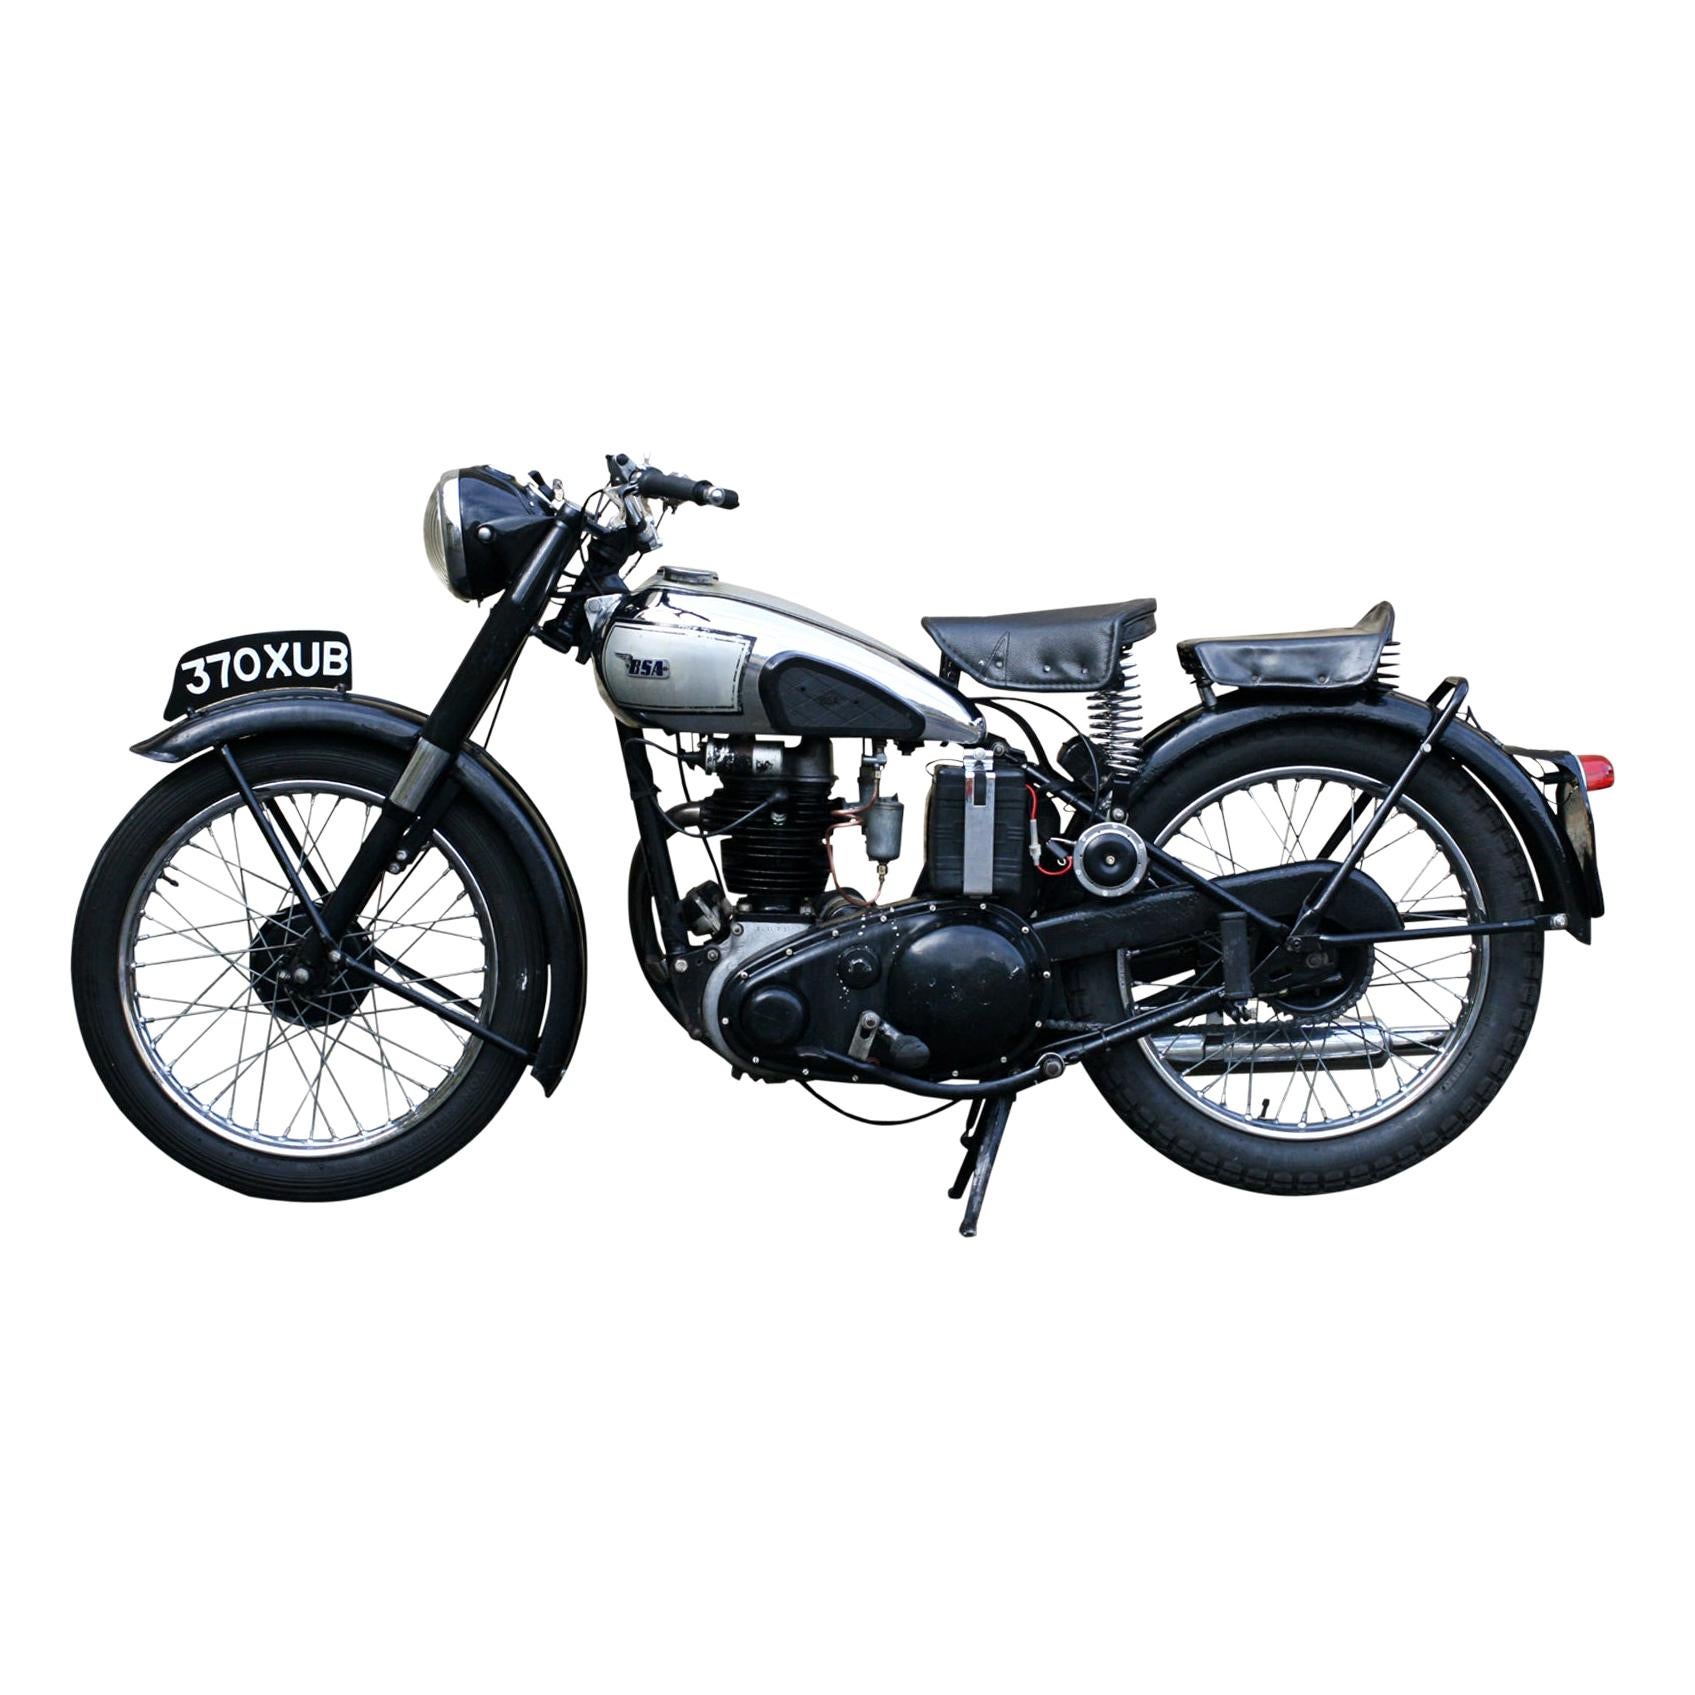 BSA C11 Motorcycle, Classic 250 Cc. Single Cylinder Overhead Valve, Rigid Frame